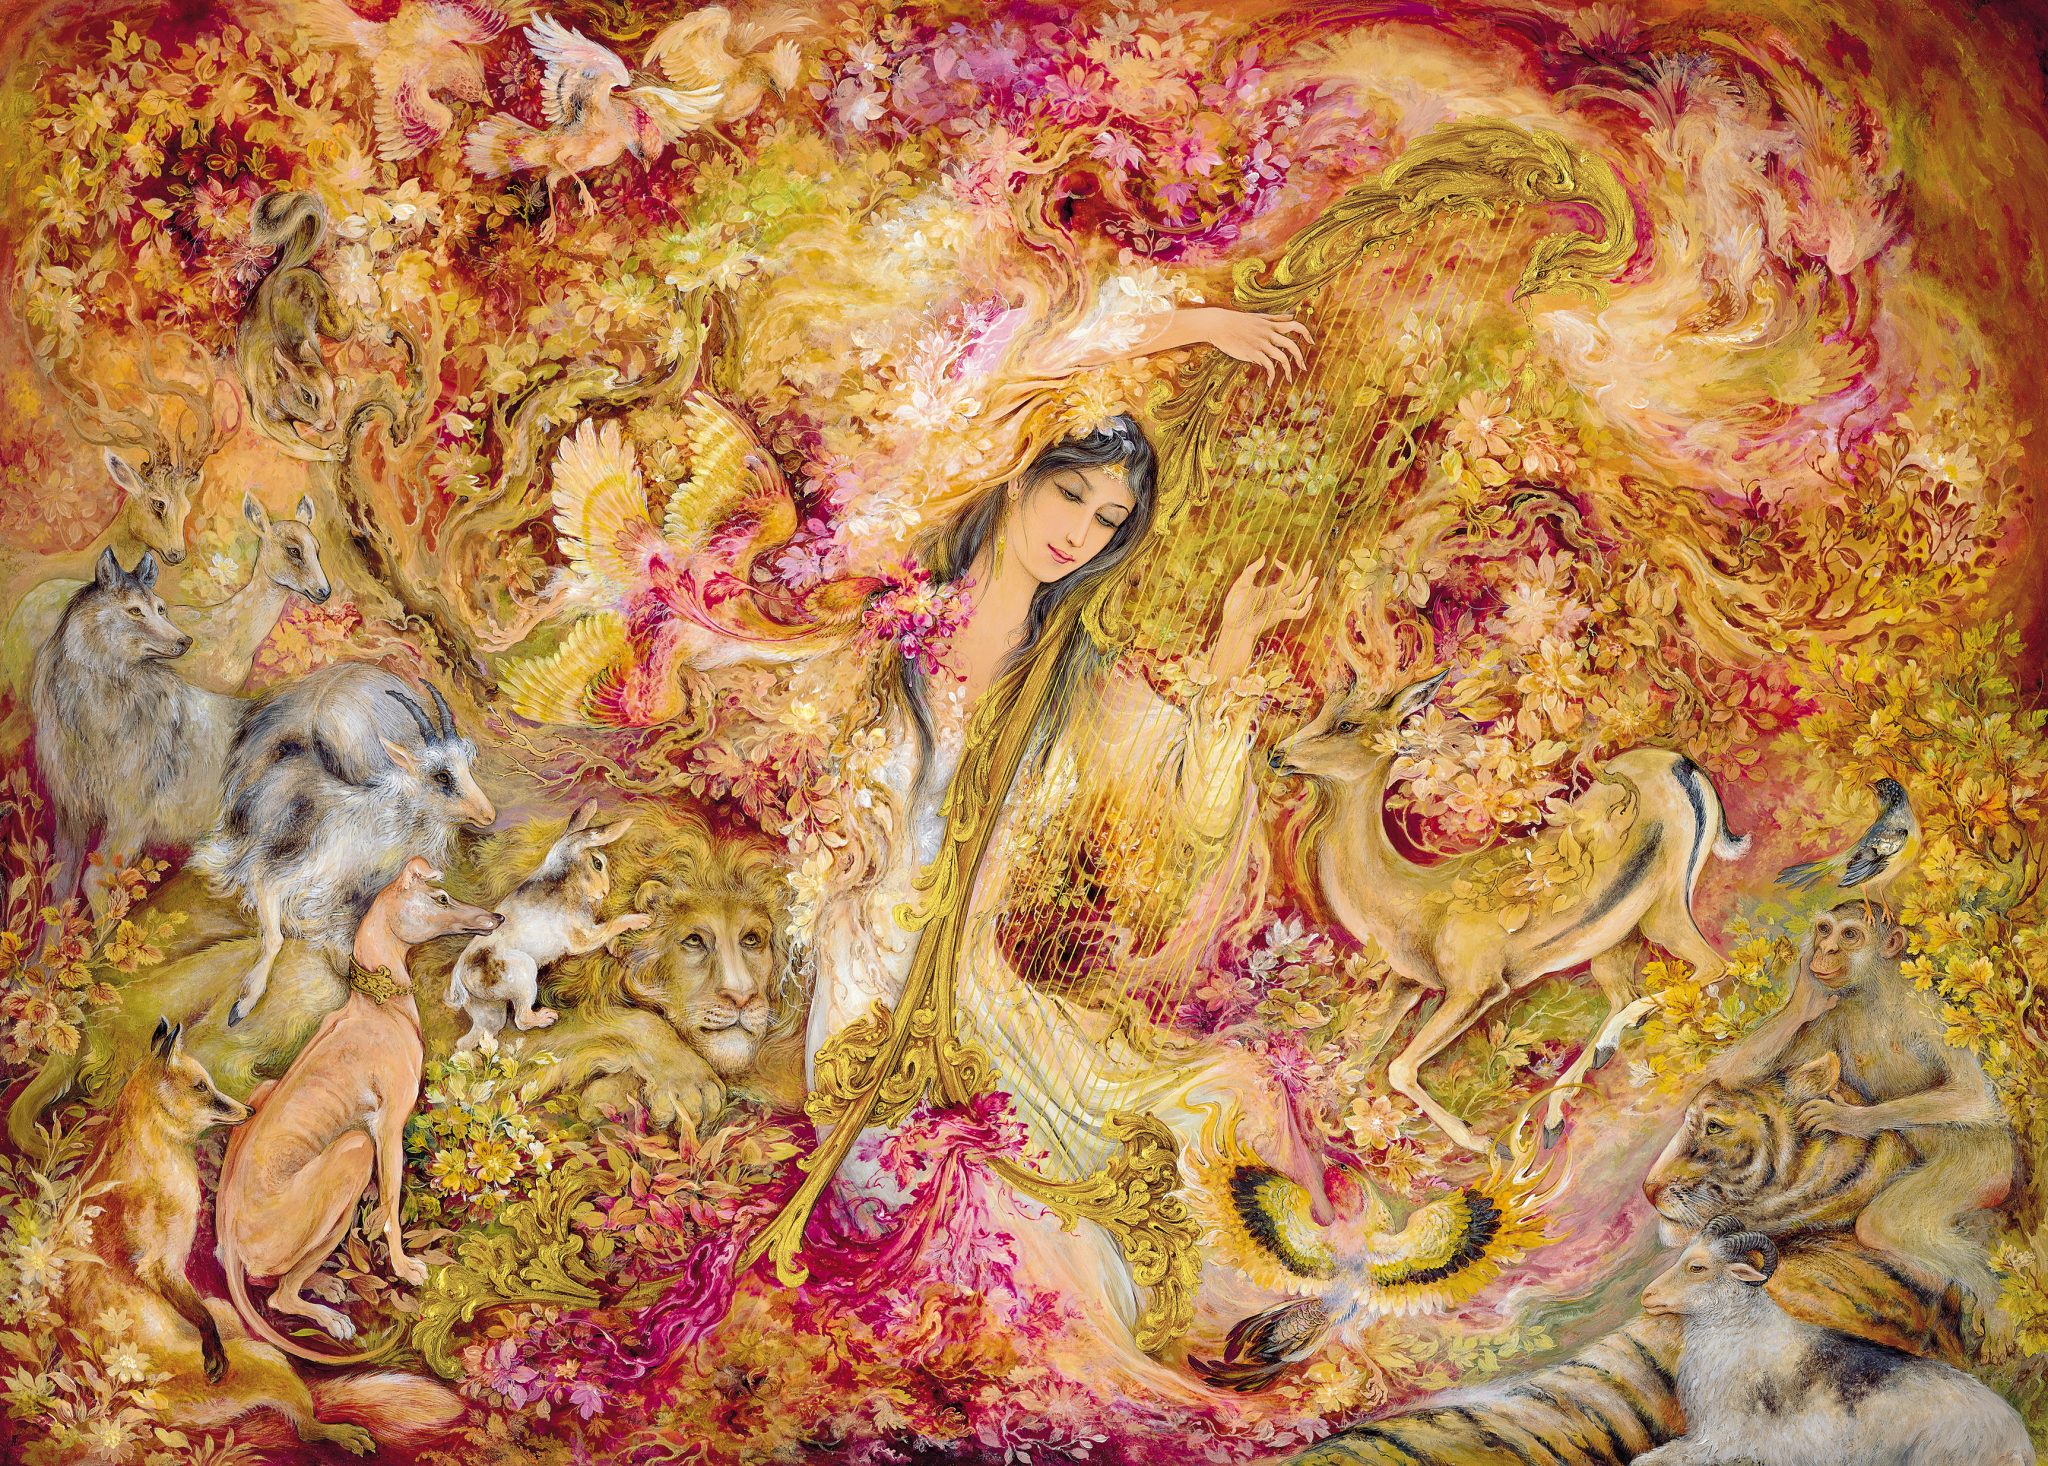 General 2048x1466 Iran painting women fantasy girl animals fantasy art